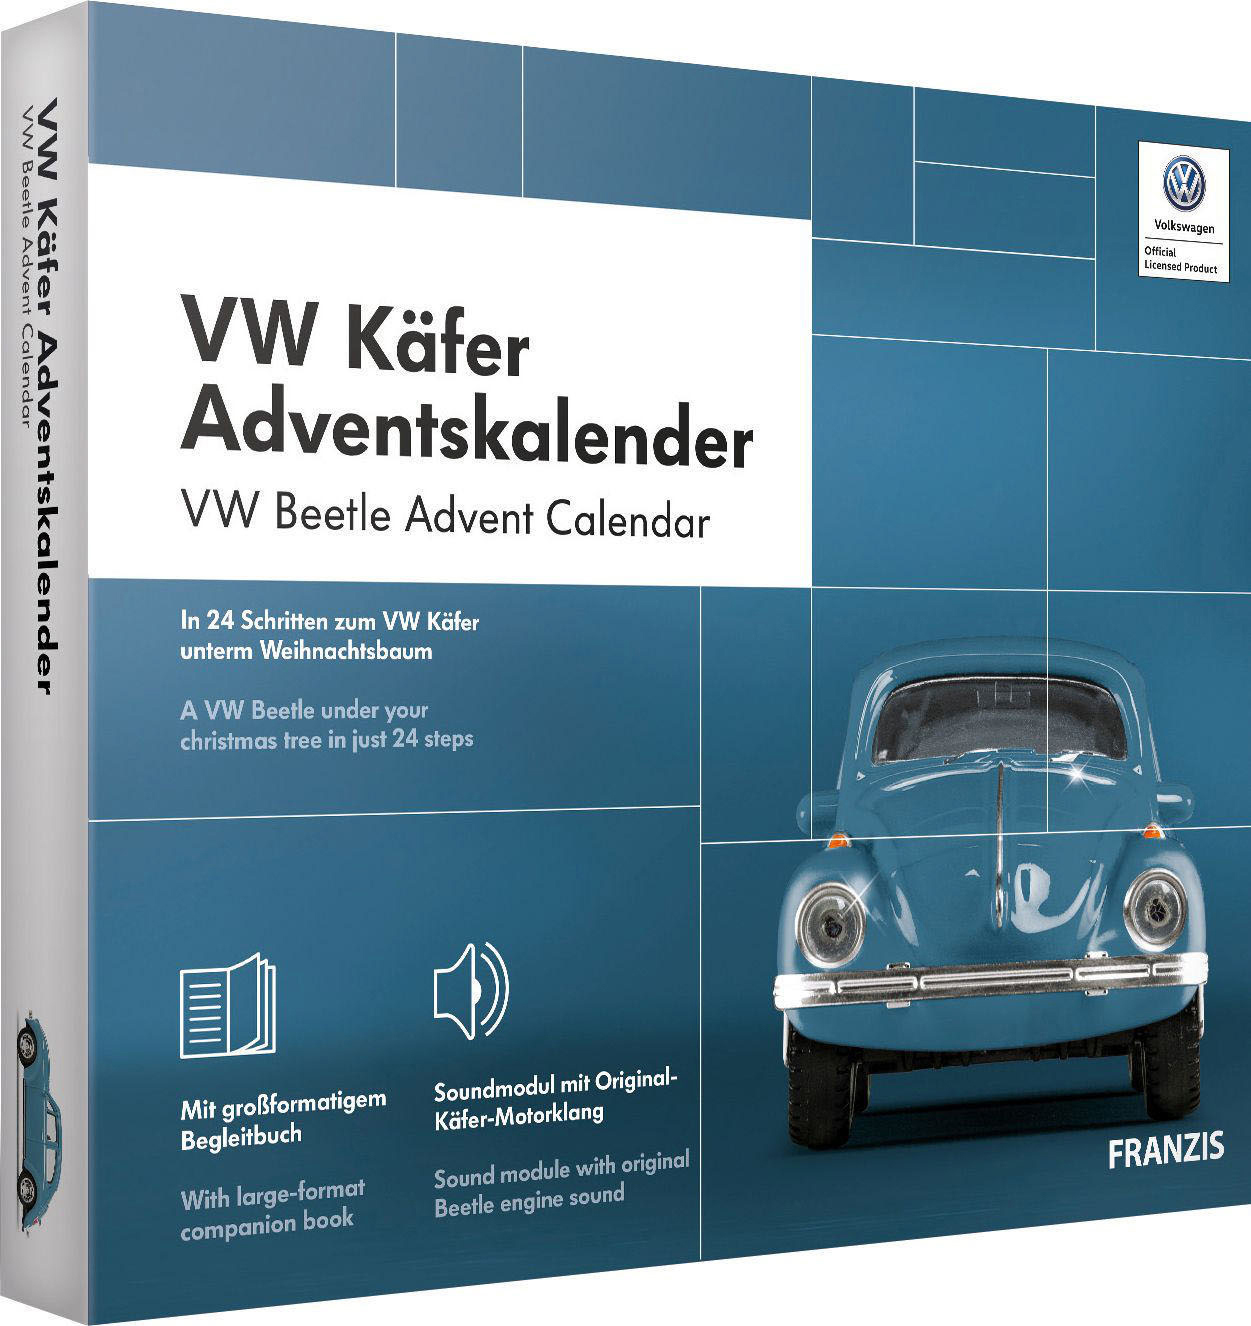 Käfer Adventskalender, VW Mehrfarbig 2020 FRANZIS